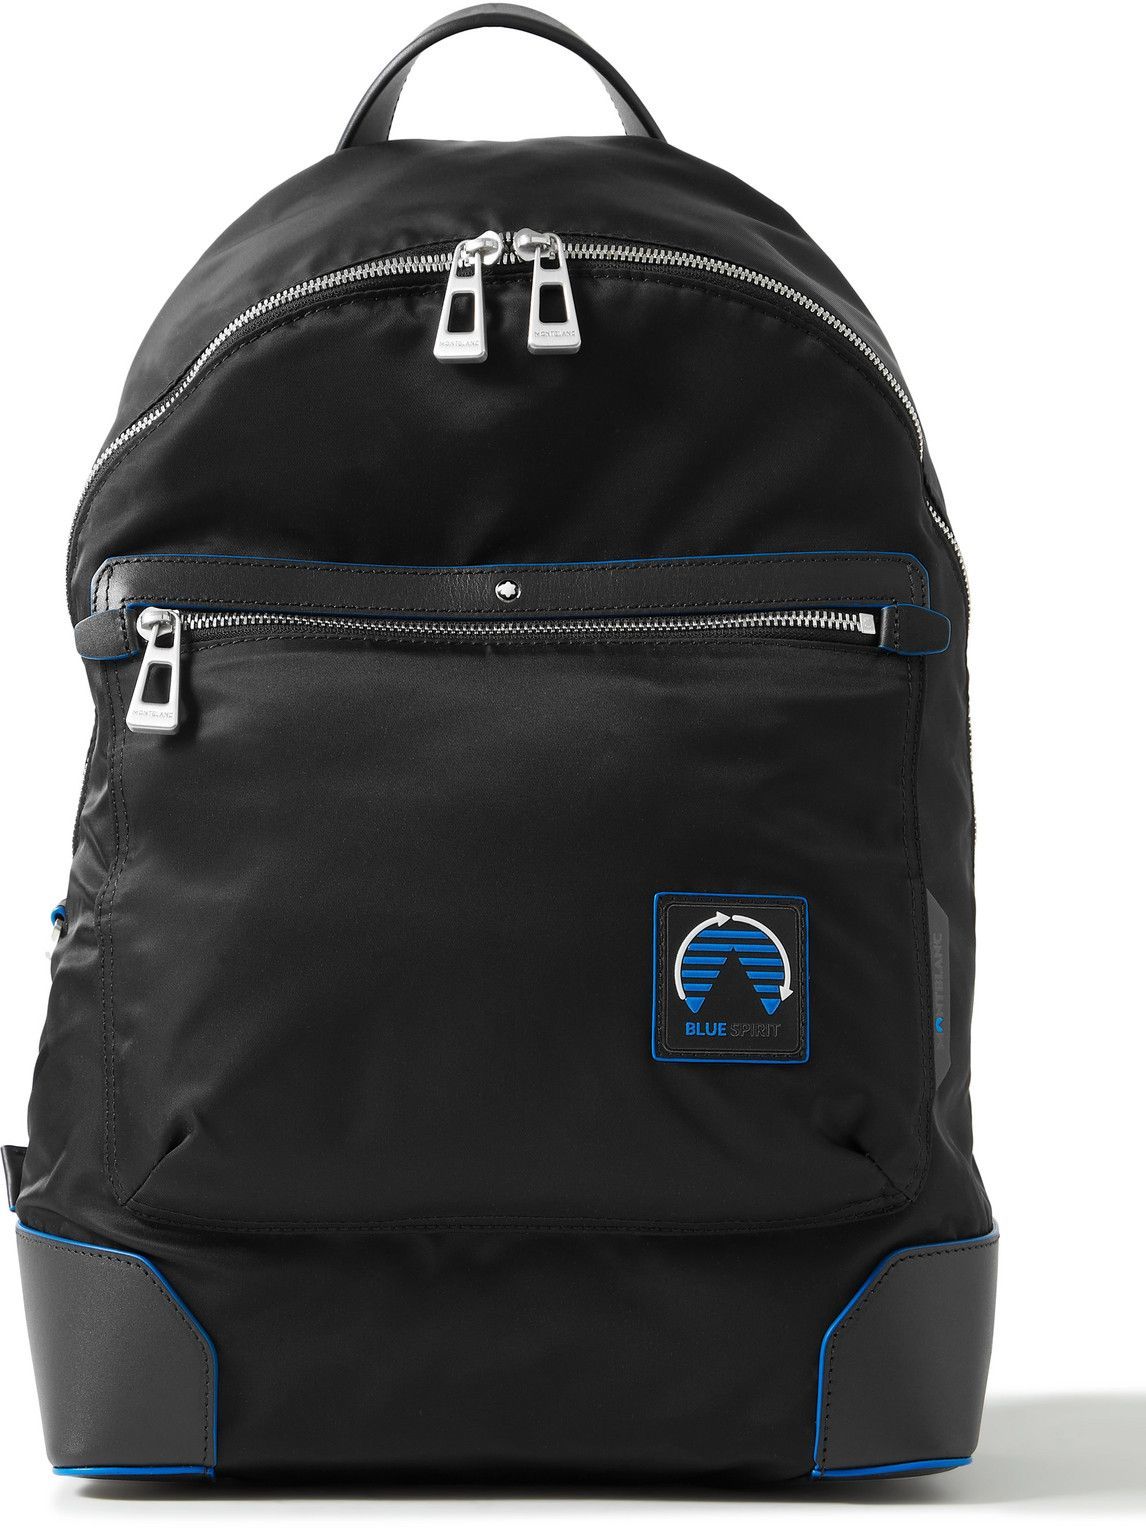 Montblanc - Blue Spirit Leather-Trimmed ECONYL Backpack Montblanc